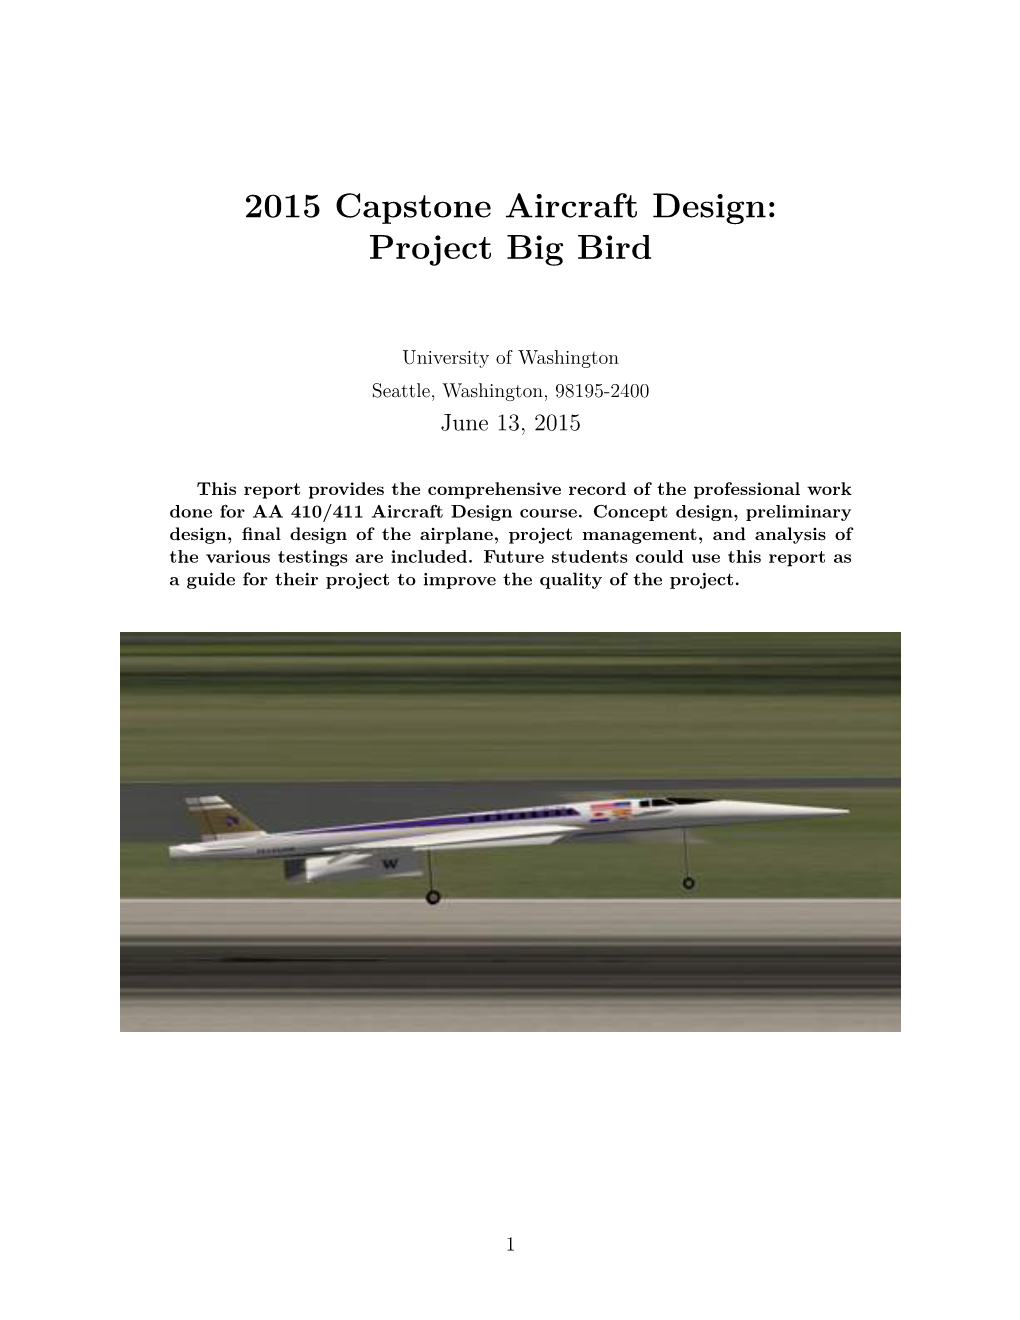 2015 Capstone Aircraft Design: Project Big Bird